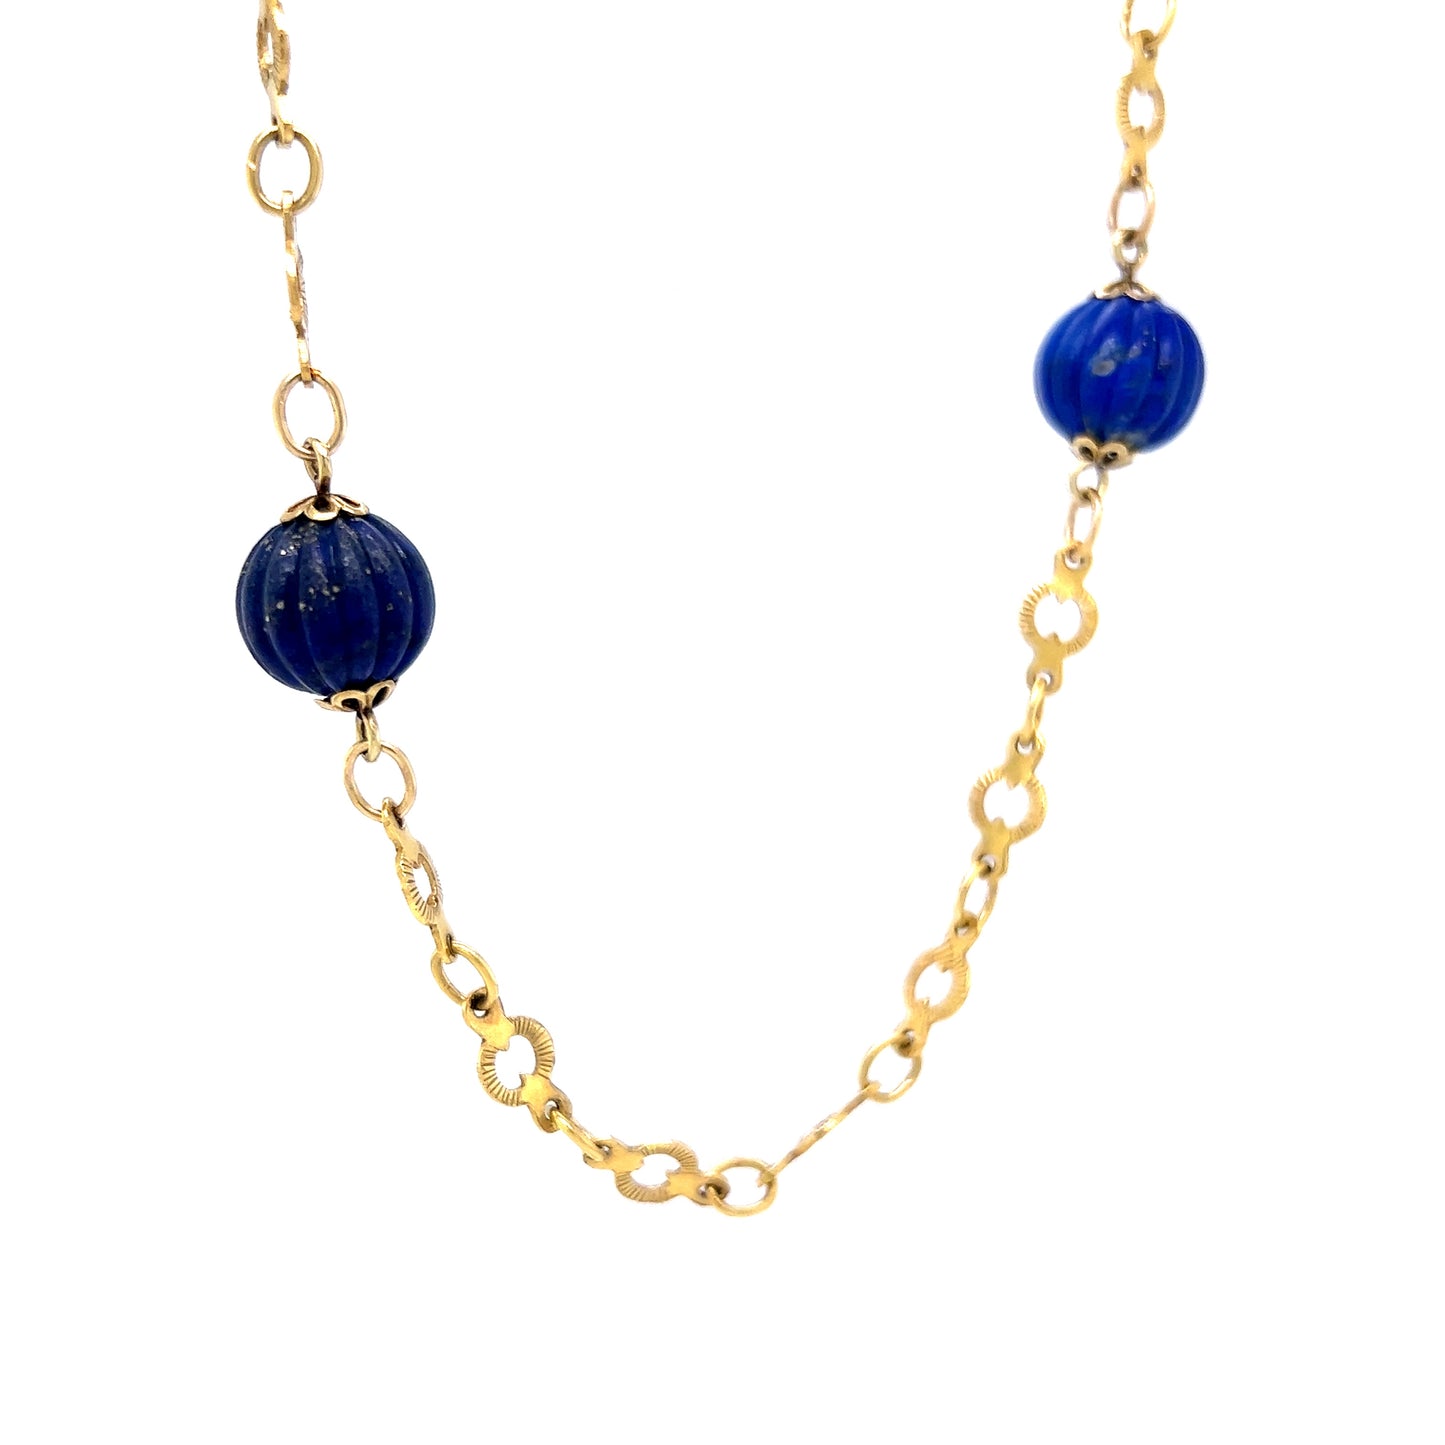 Vintage Mid-Century Lapis Lazuli Beaded Necklace in 18k Yellow Gold